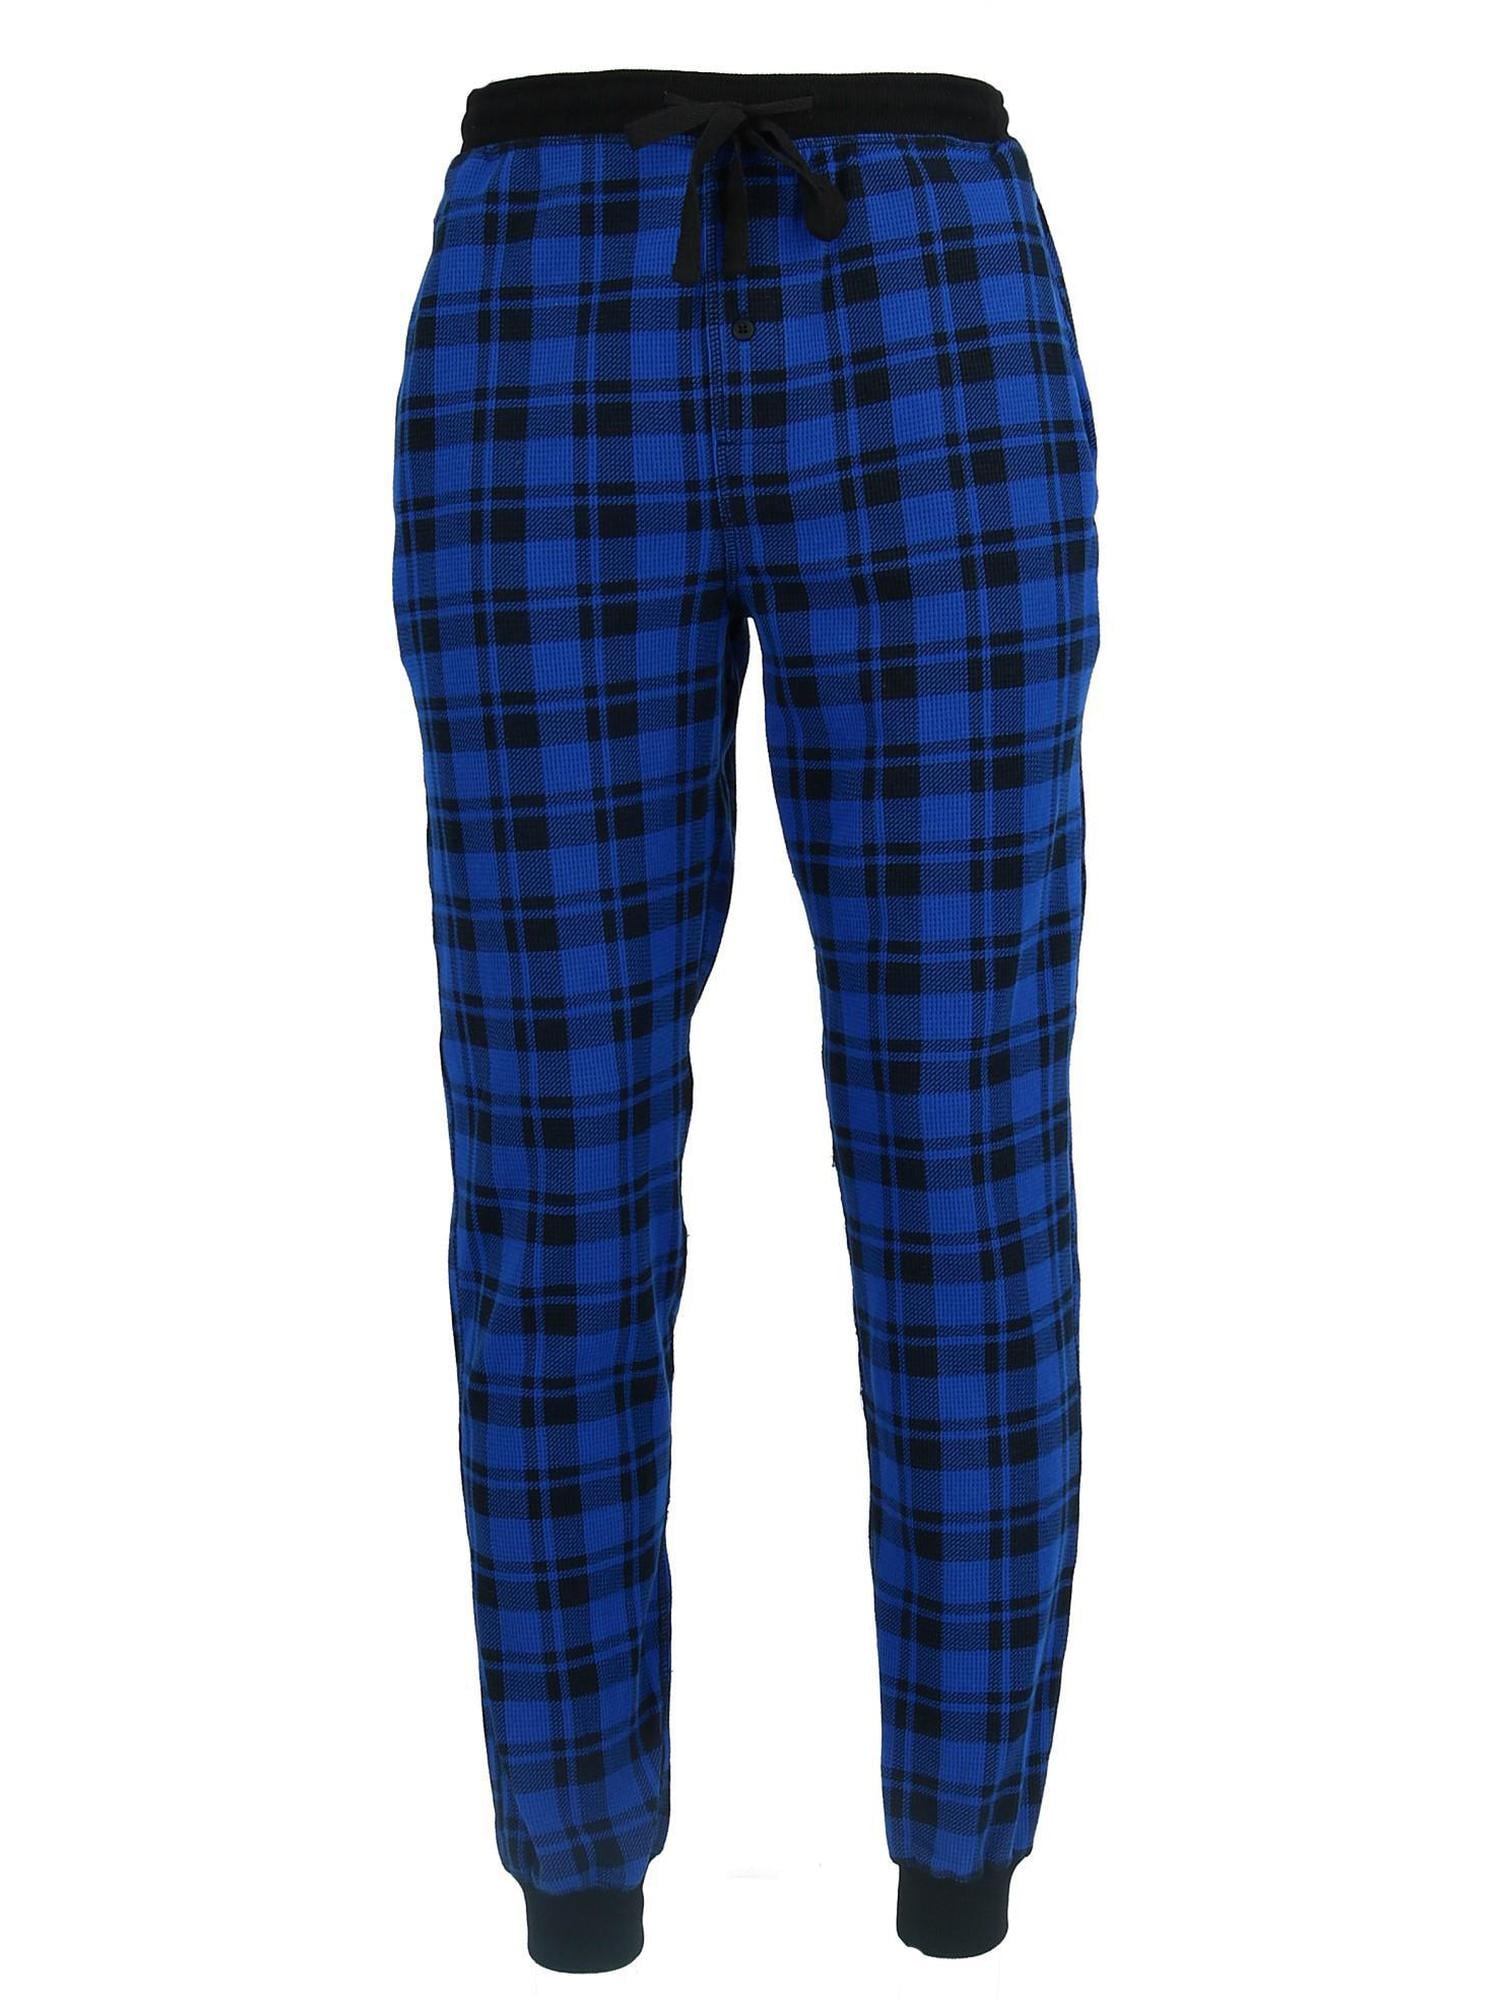 Men's Jogger Style Lounge Pajama Pants - Walmart.com